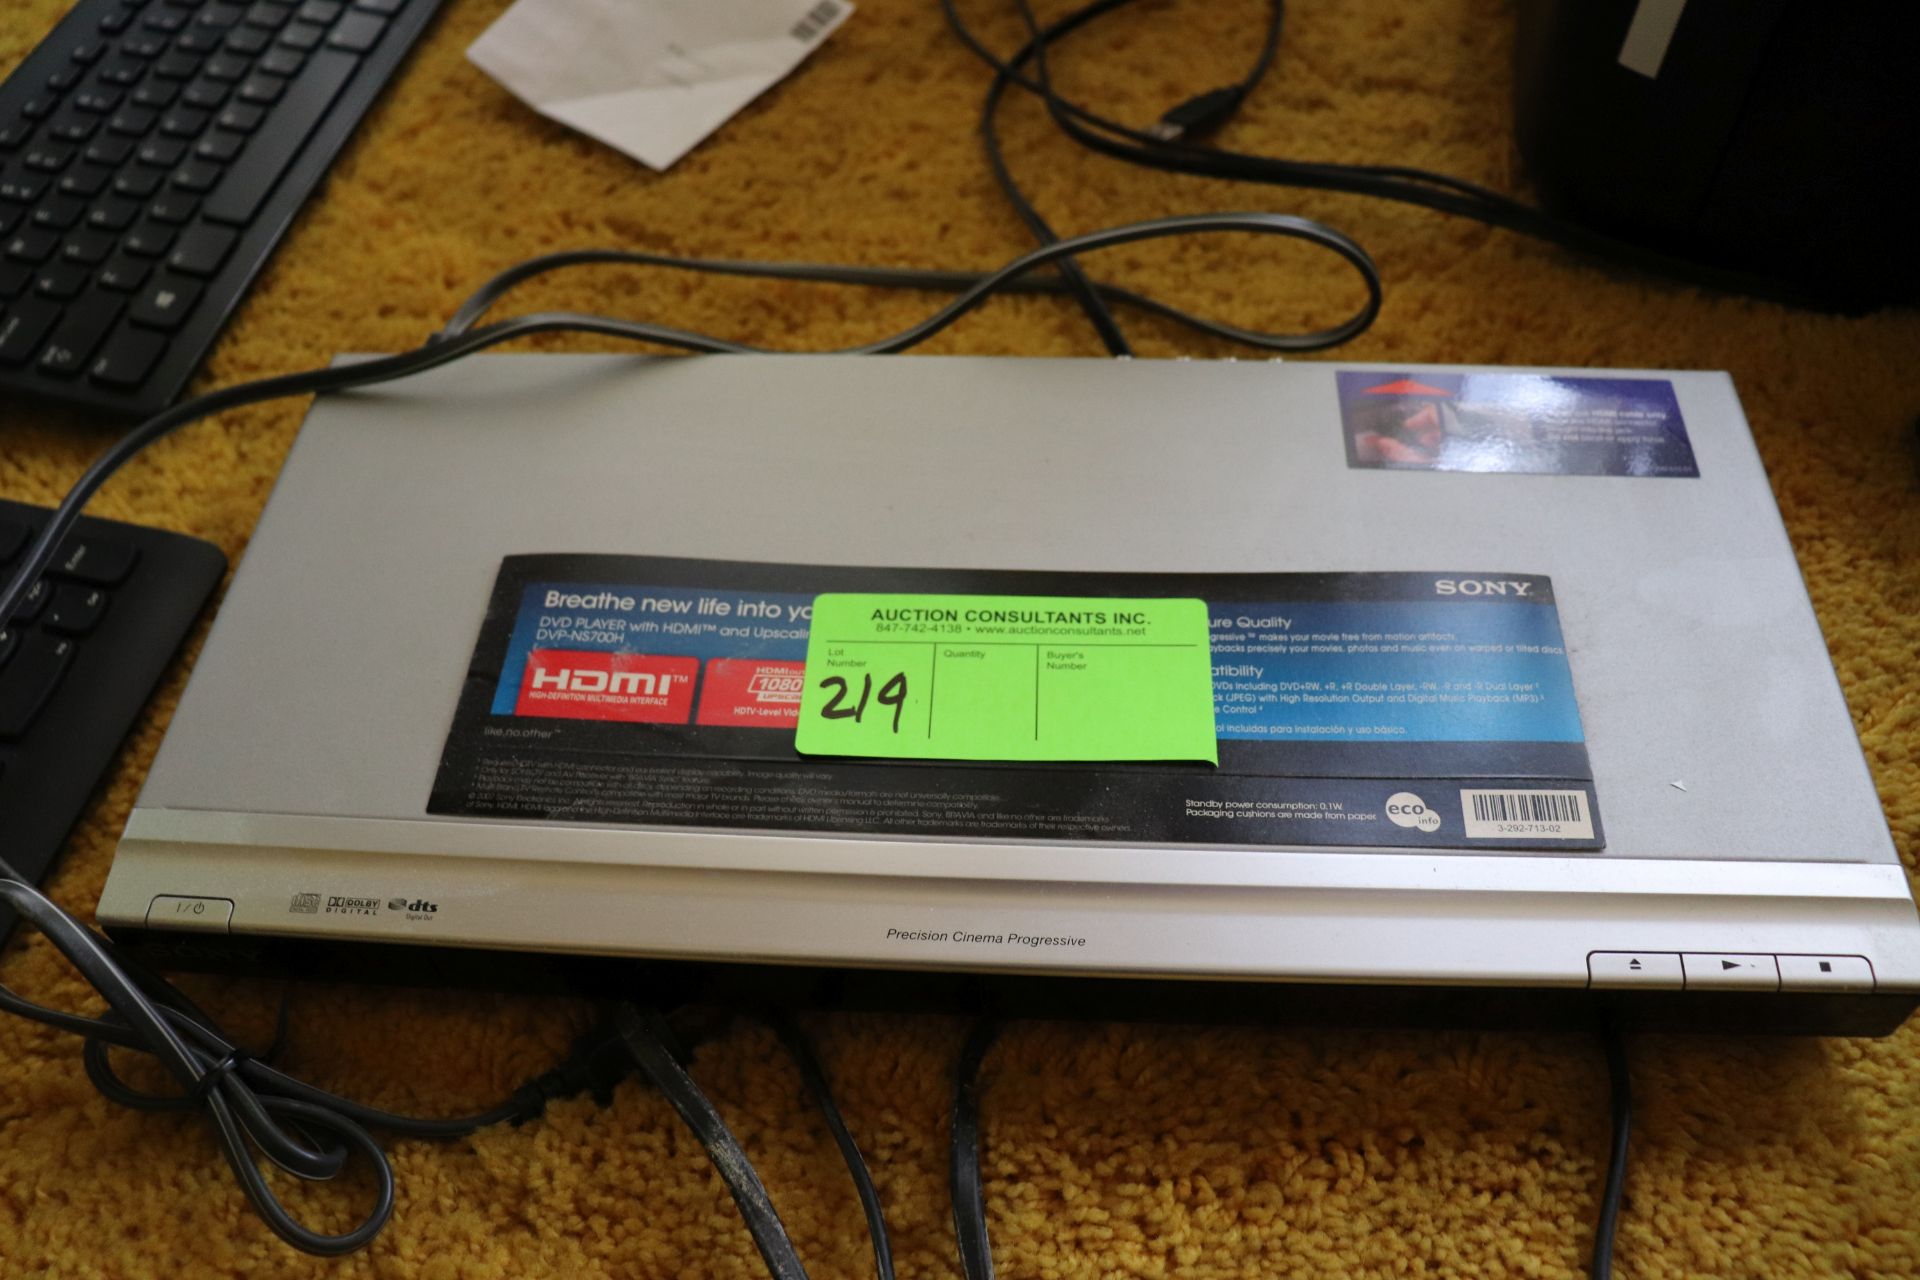 Sony CD DVD player, model DVP-NS700H - Image 2 of 2